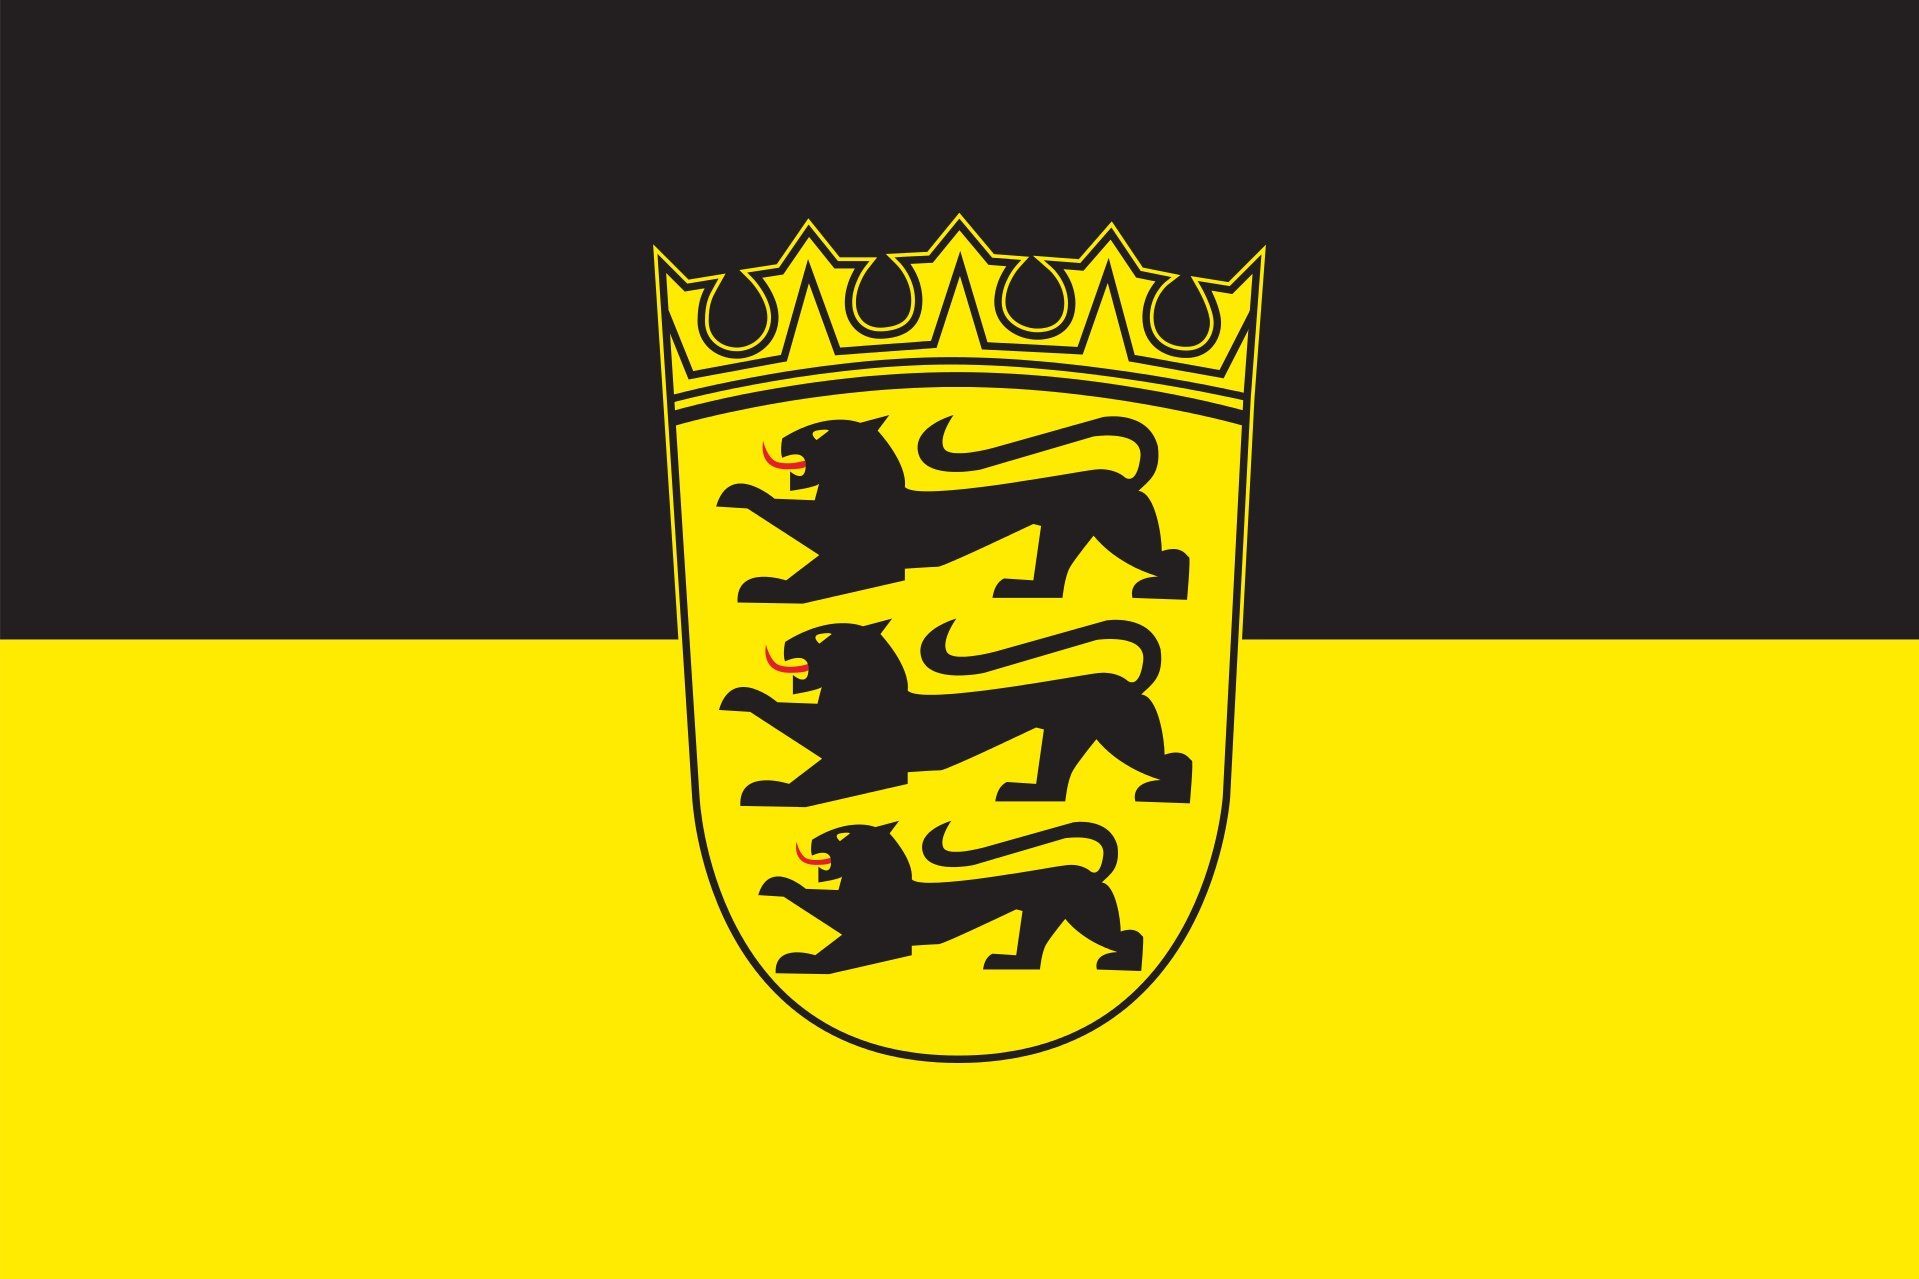 Baden-Württemberg g/m² flaggenmeer Wappen Flagge mit 80